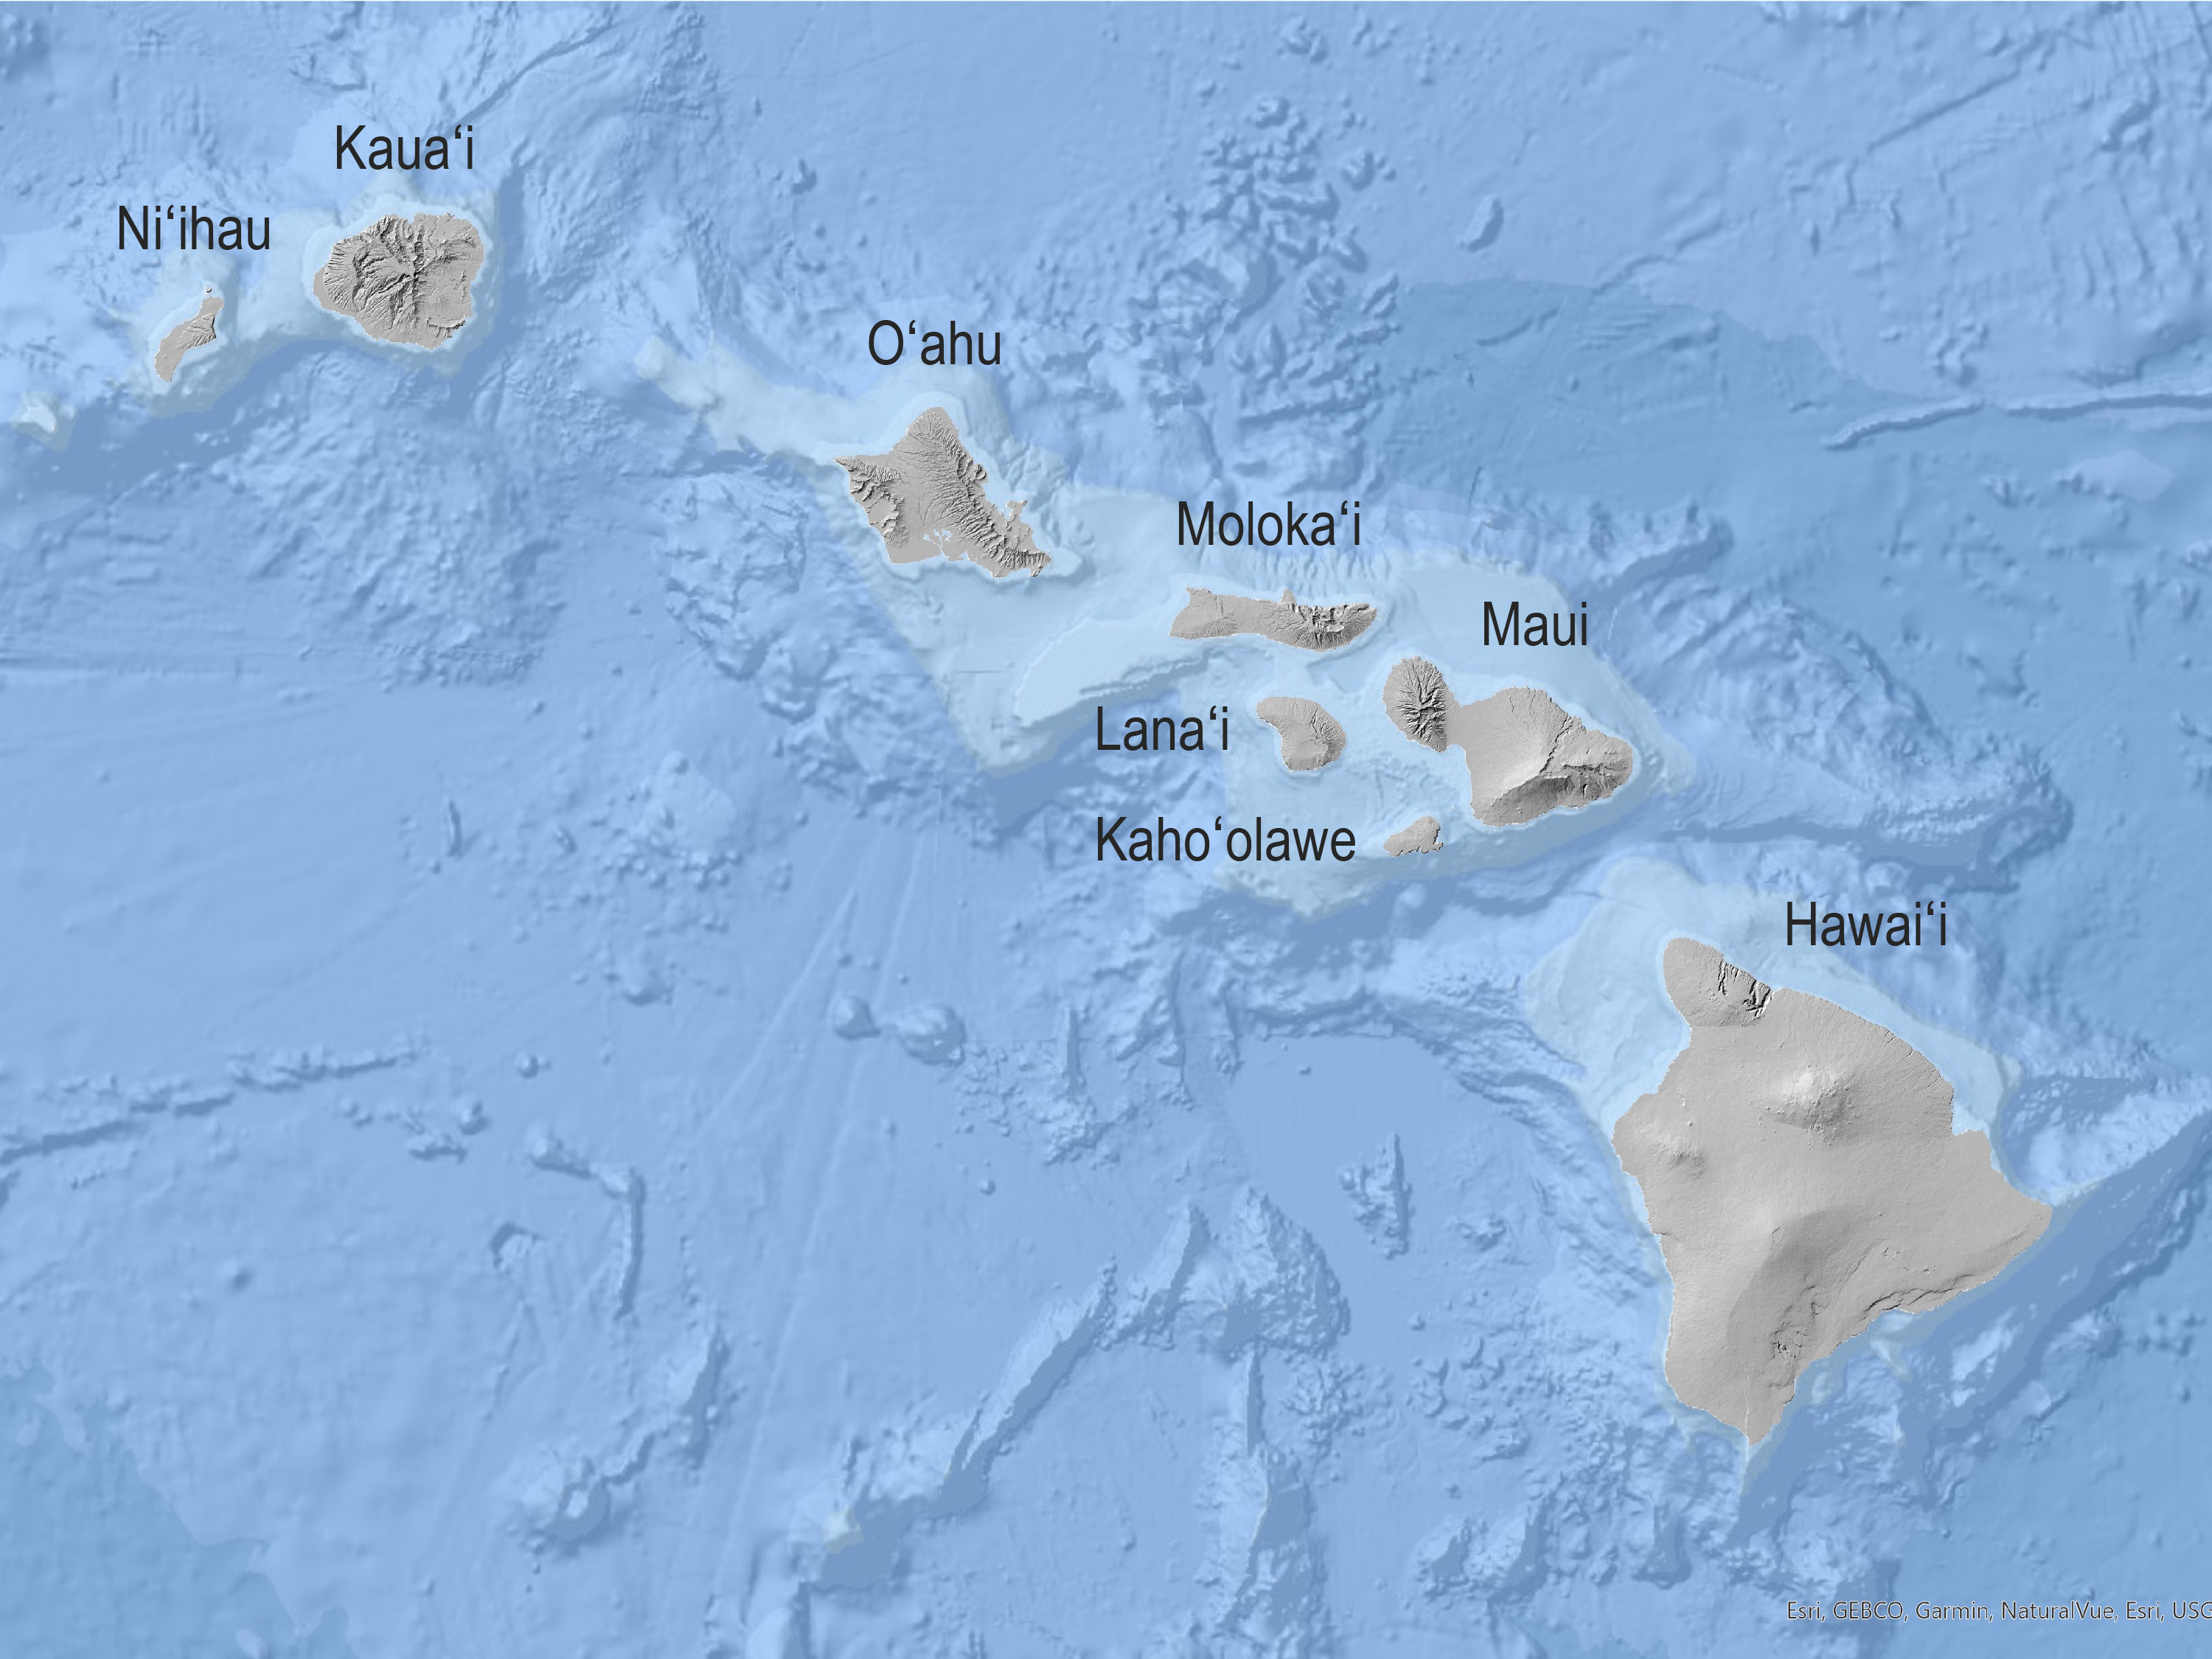 Topographic map of the Main Hawaiian Islands—from northwest to southeast Ni‘ihau, Kaua‘i, O‘ahu, Moloka‘i, Lana‘i, Kaho‘olawe, Maui, Hawai‘i—and the seafloors surrounding them.